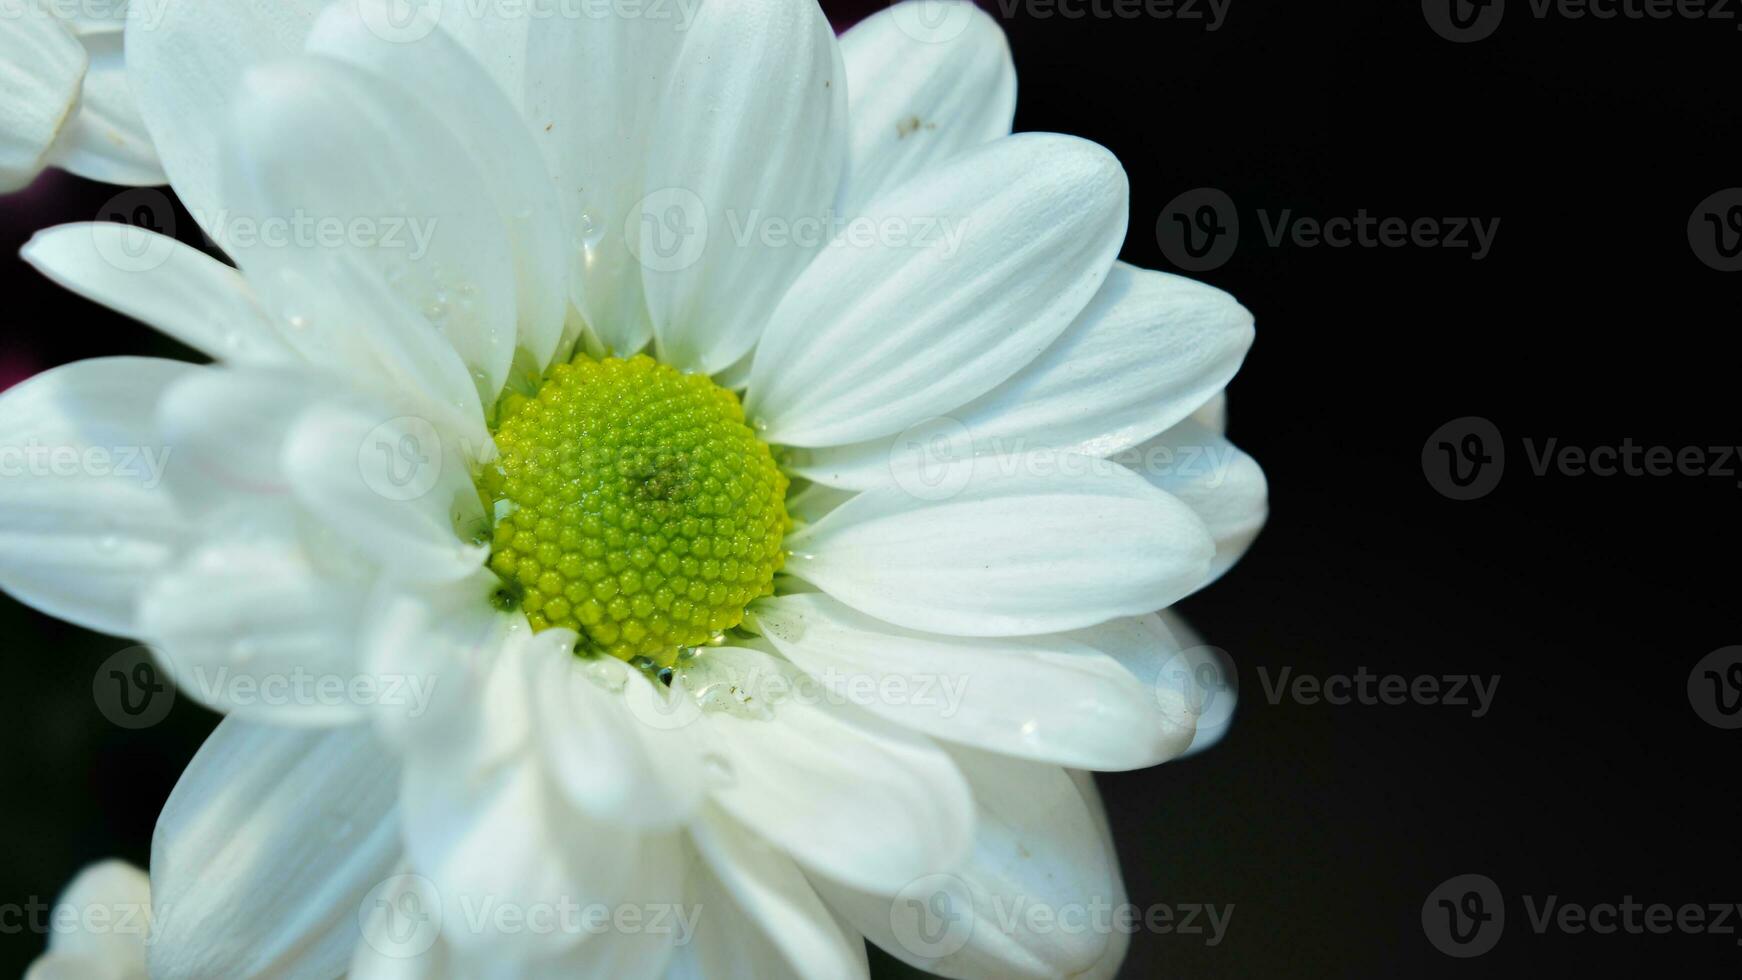 A Sprig of White Chrysanthemum indicum Flower photo